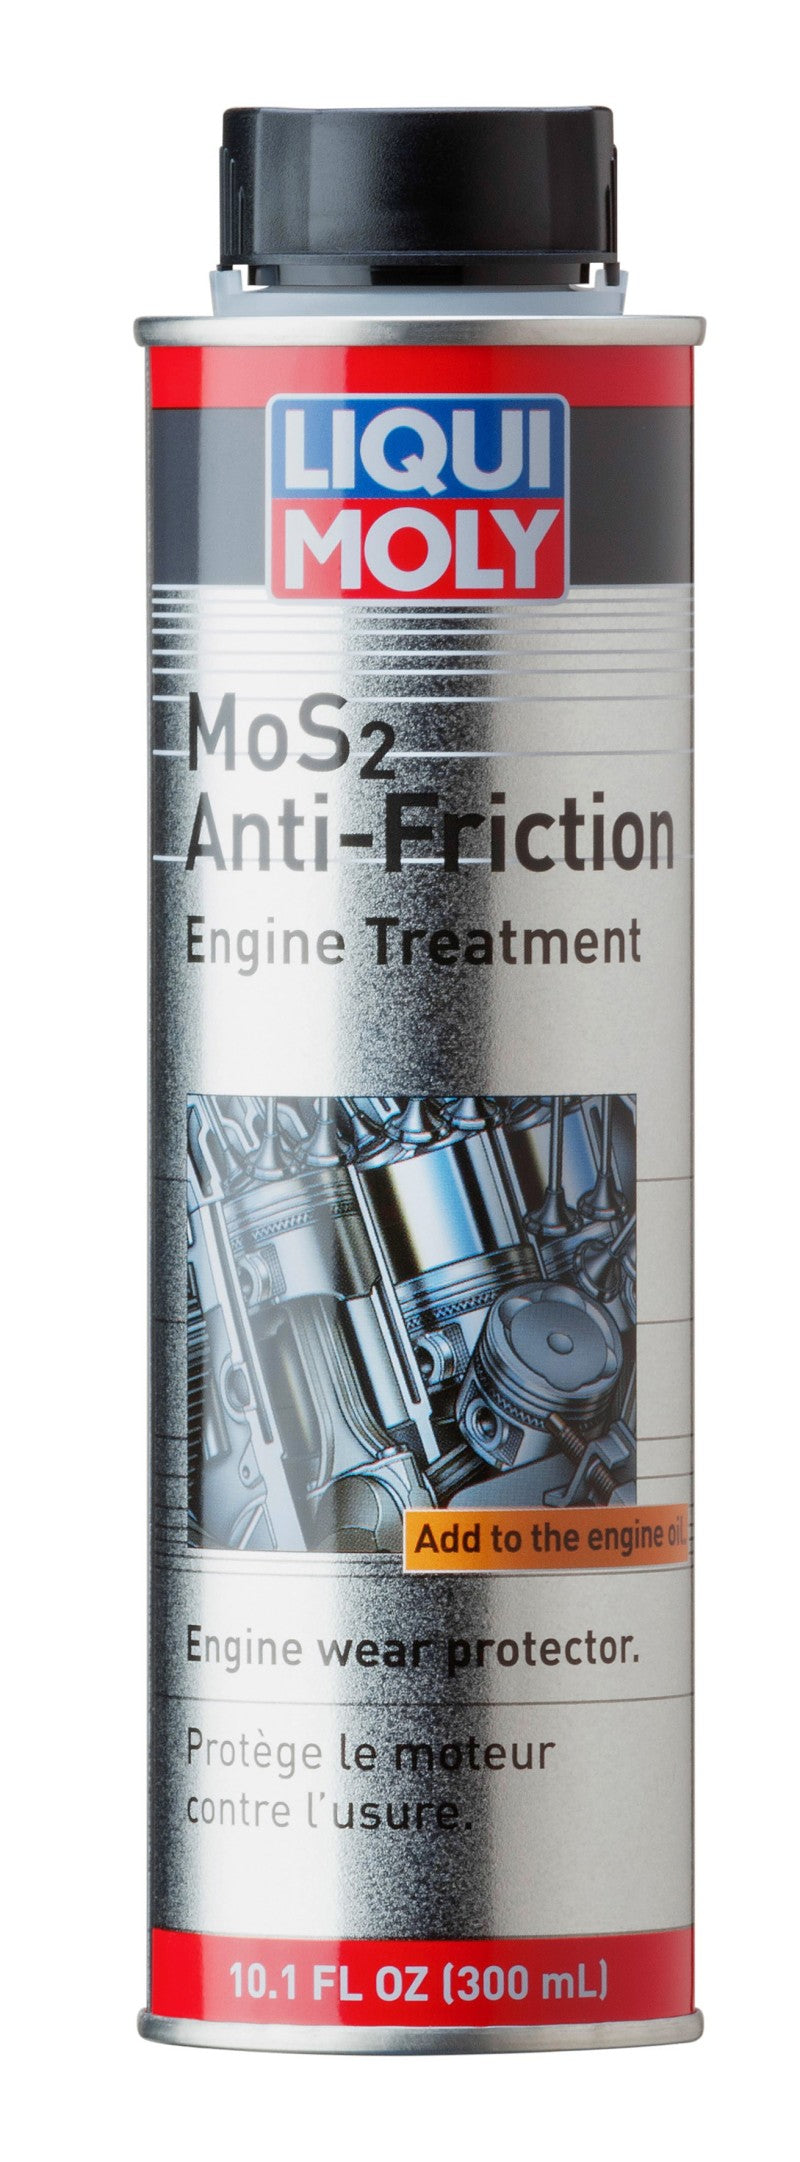 LIQUI MOLY 300mL MoS2 Anti-Friction Engine Treatment.